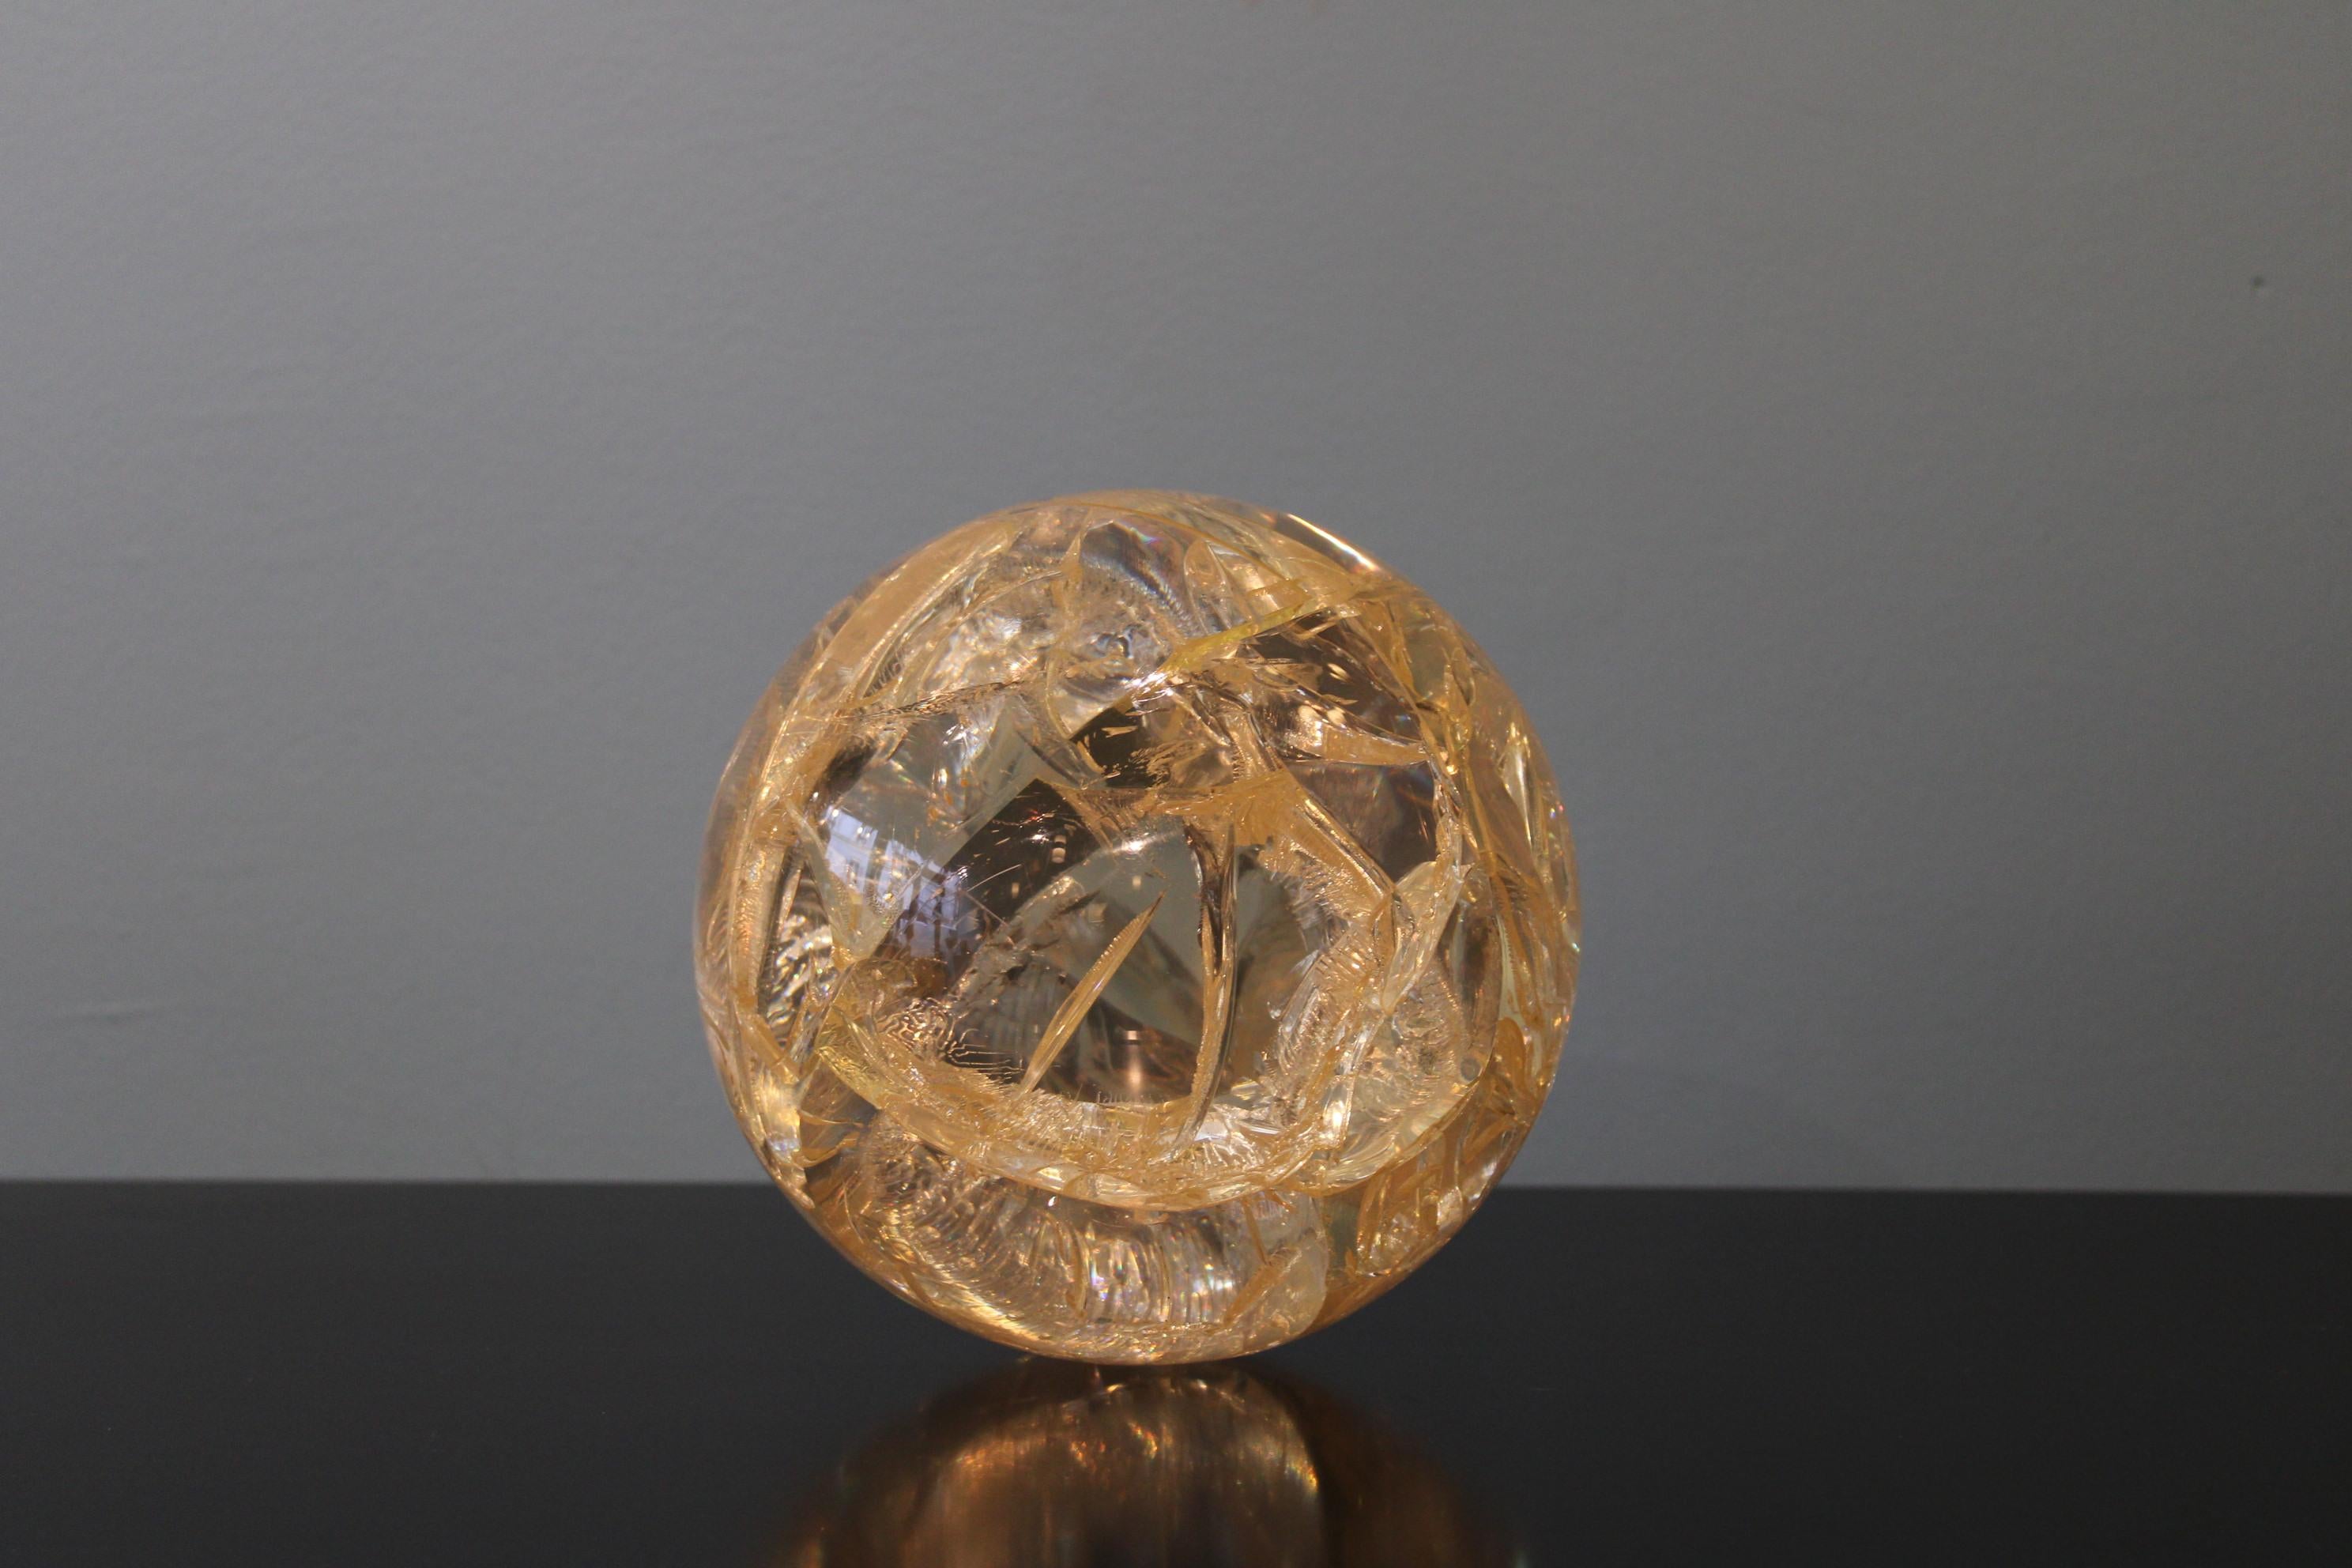 Fractal resin ball attribued to François Godebski.